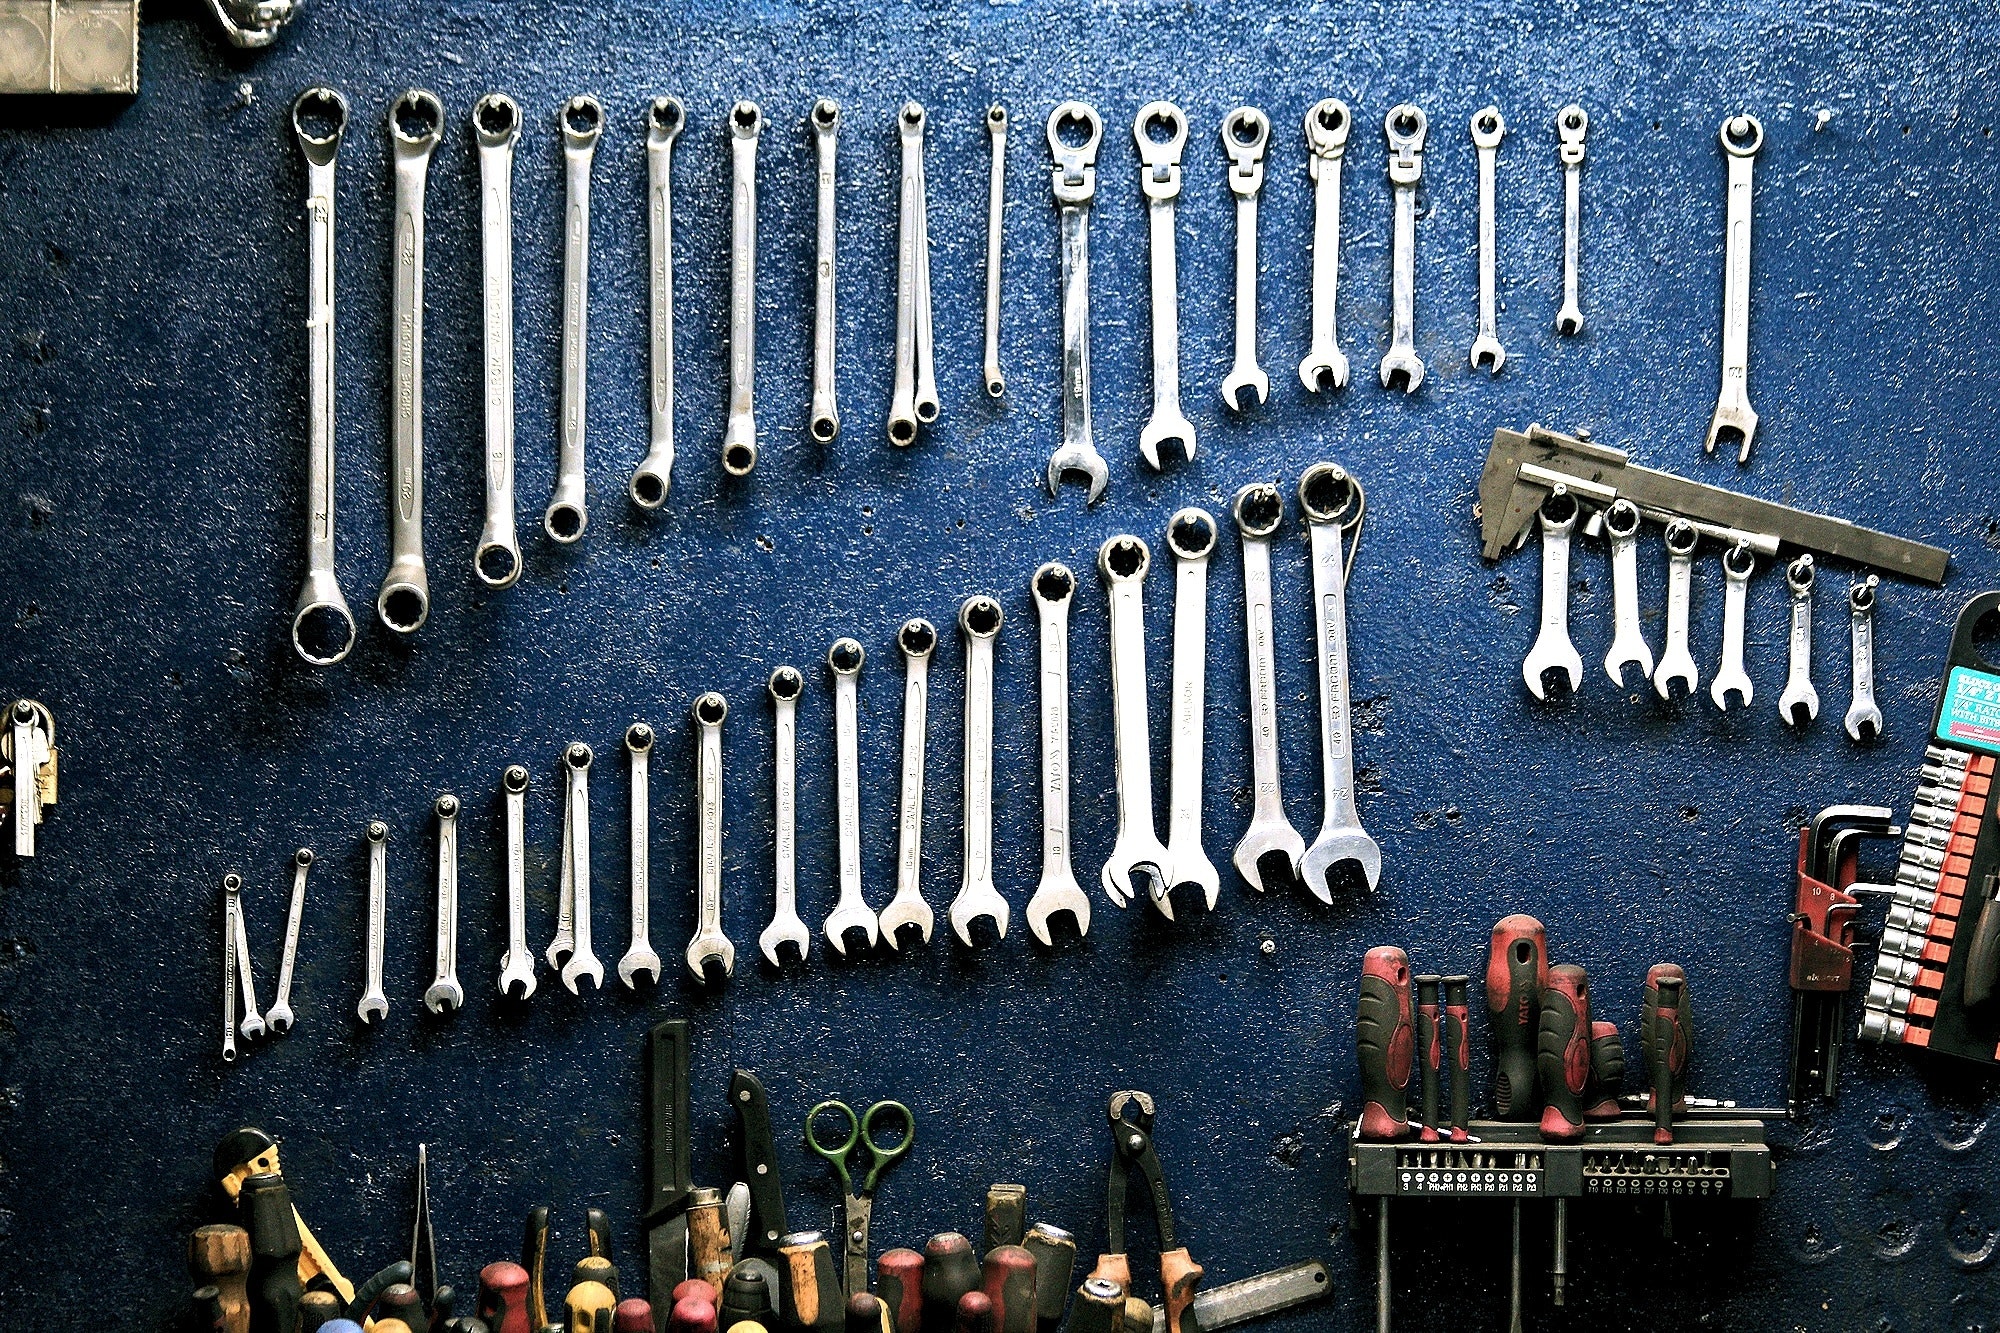 A set of car mechanics' tools hang on the wall of a mechanic's workspace.